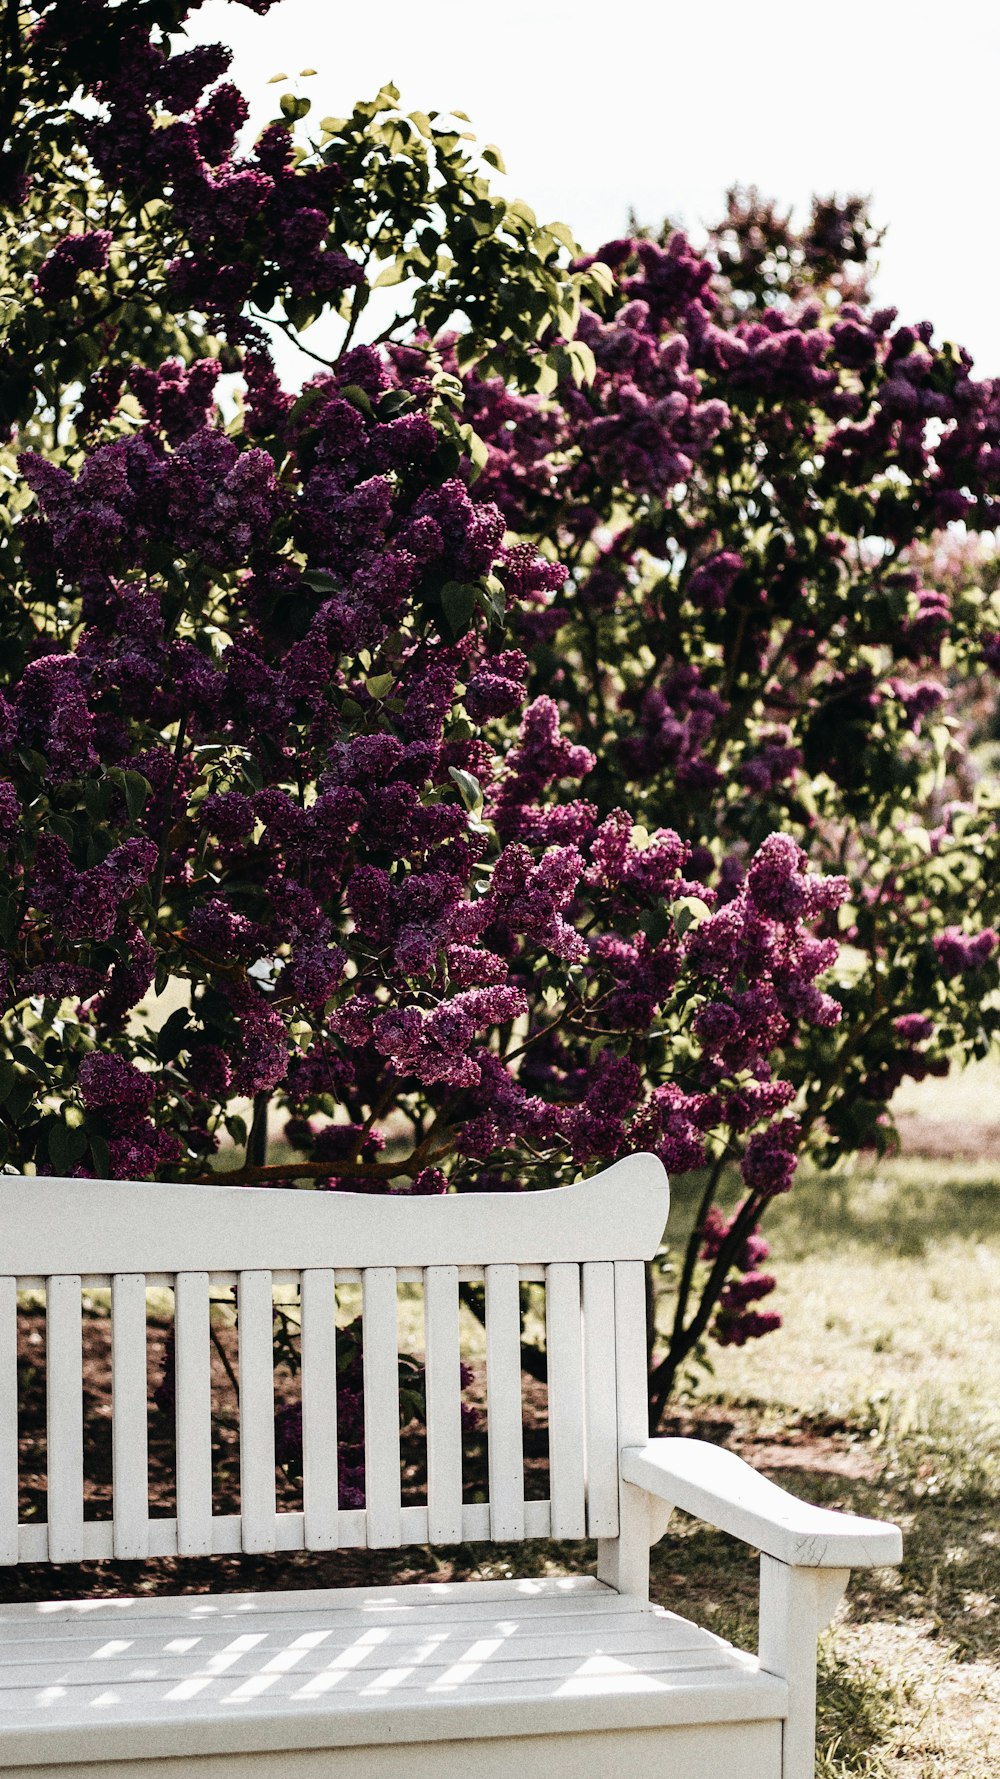 una panchina bianca seduta di fronte a un albero pieno di fiori viola